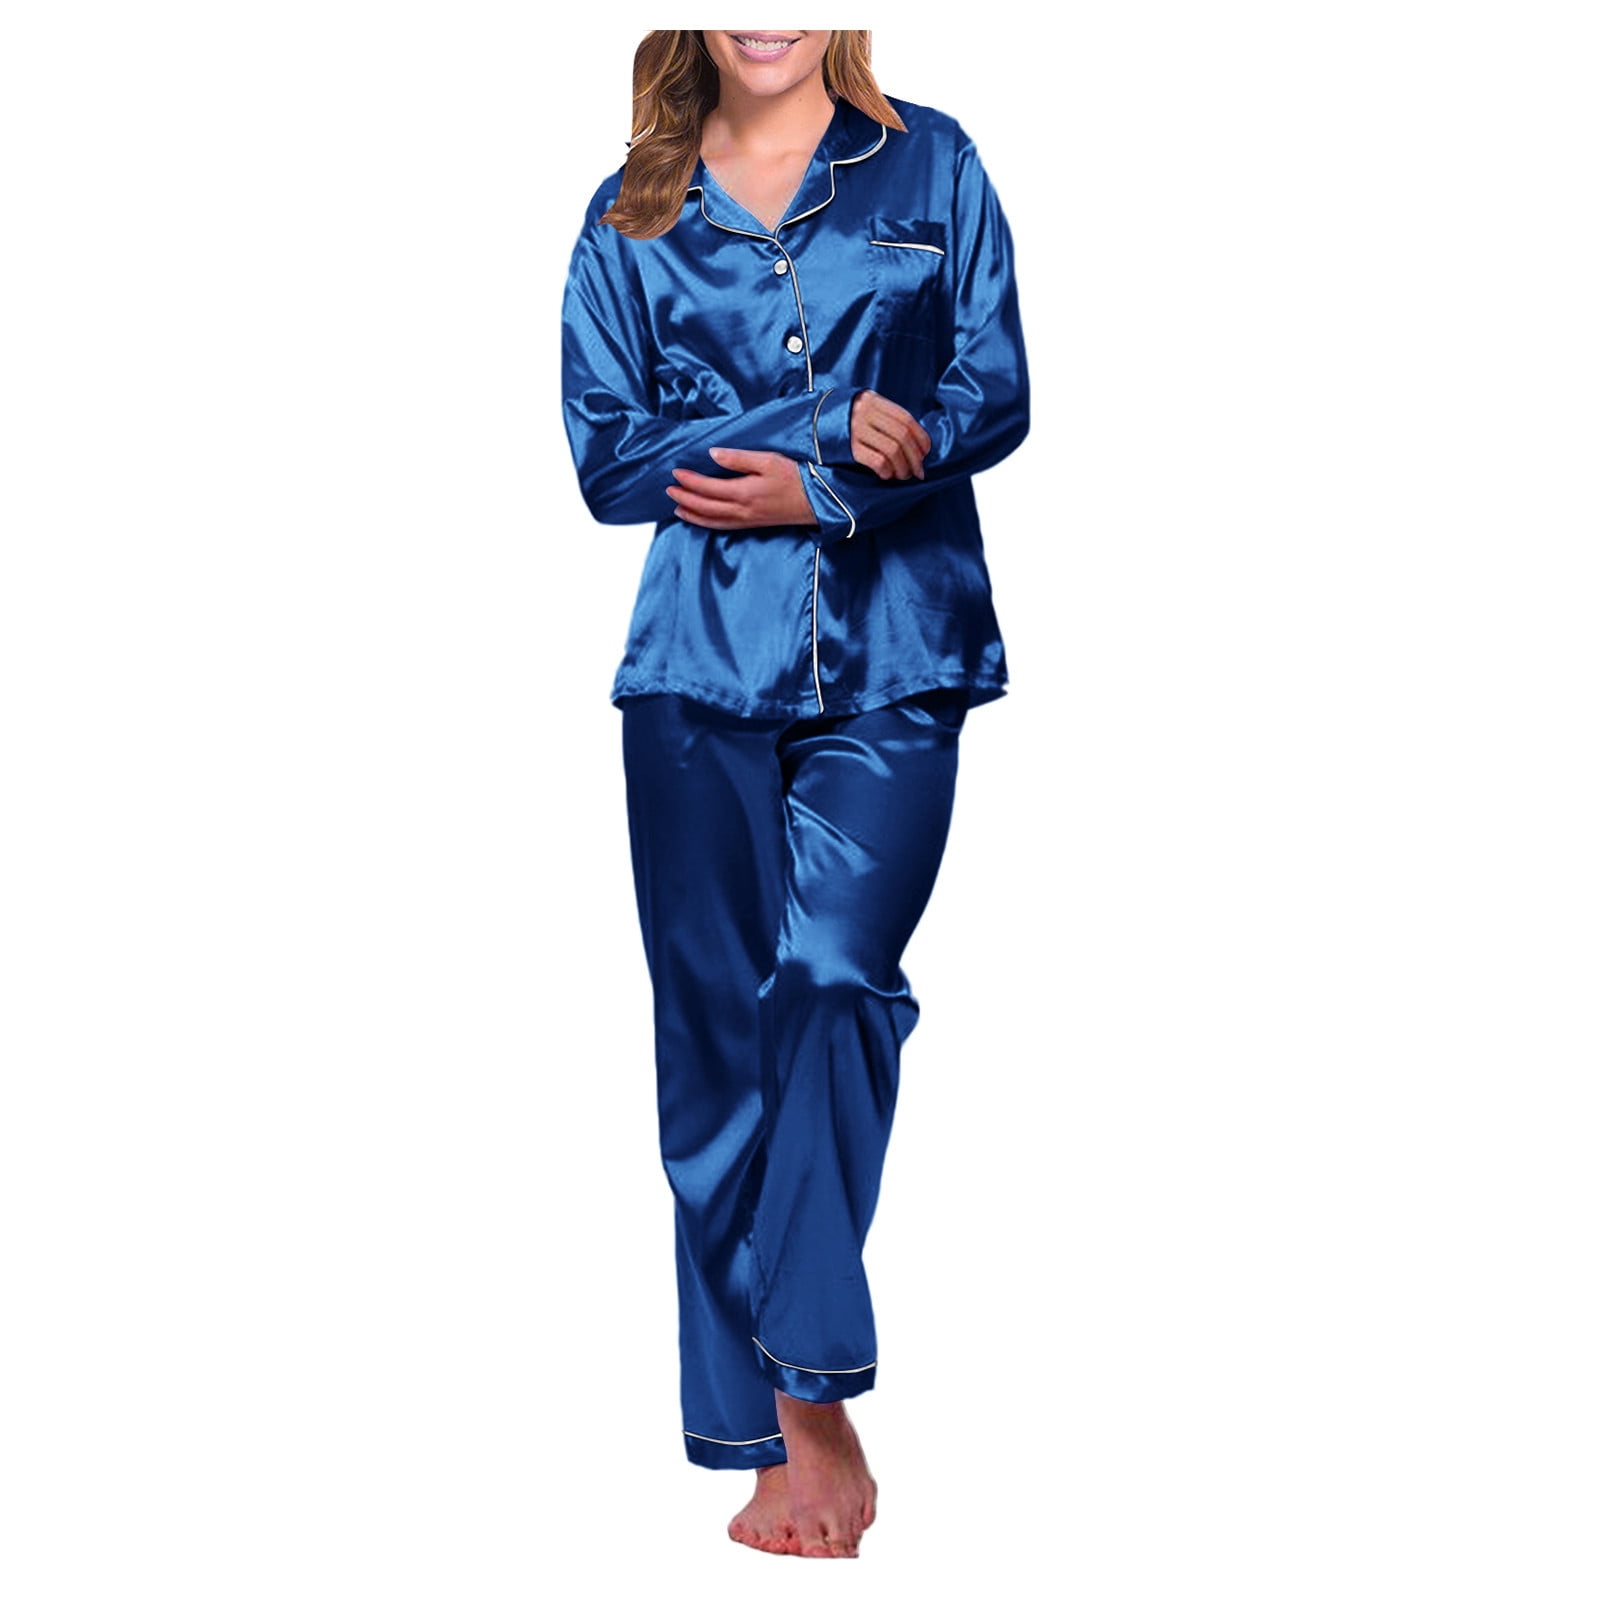 Skpblutn Plus Size Lingerie Pajama Set for Women Long Nightwear Robe Underwear Suit Satin Long Loose Nightgowns Sleepwear Blue e8b930f7 5a42 4ebd b868 413c72601285.6dea8348cc3158b8f425fc8ee830751c